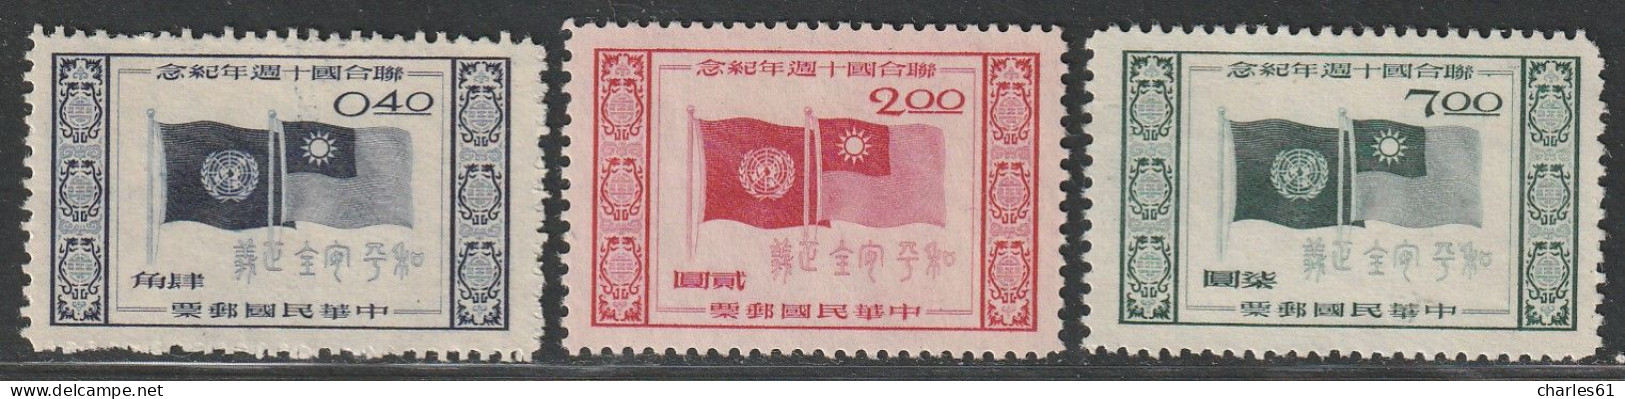 TAIWAN (Formose) - N°196/8 Nsg (1955) Nations Unies - Unused Stamps